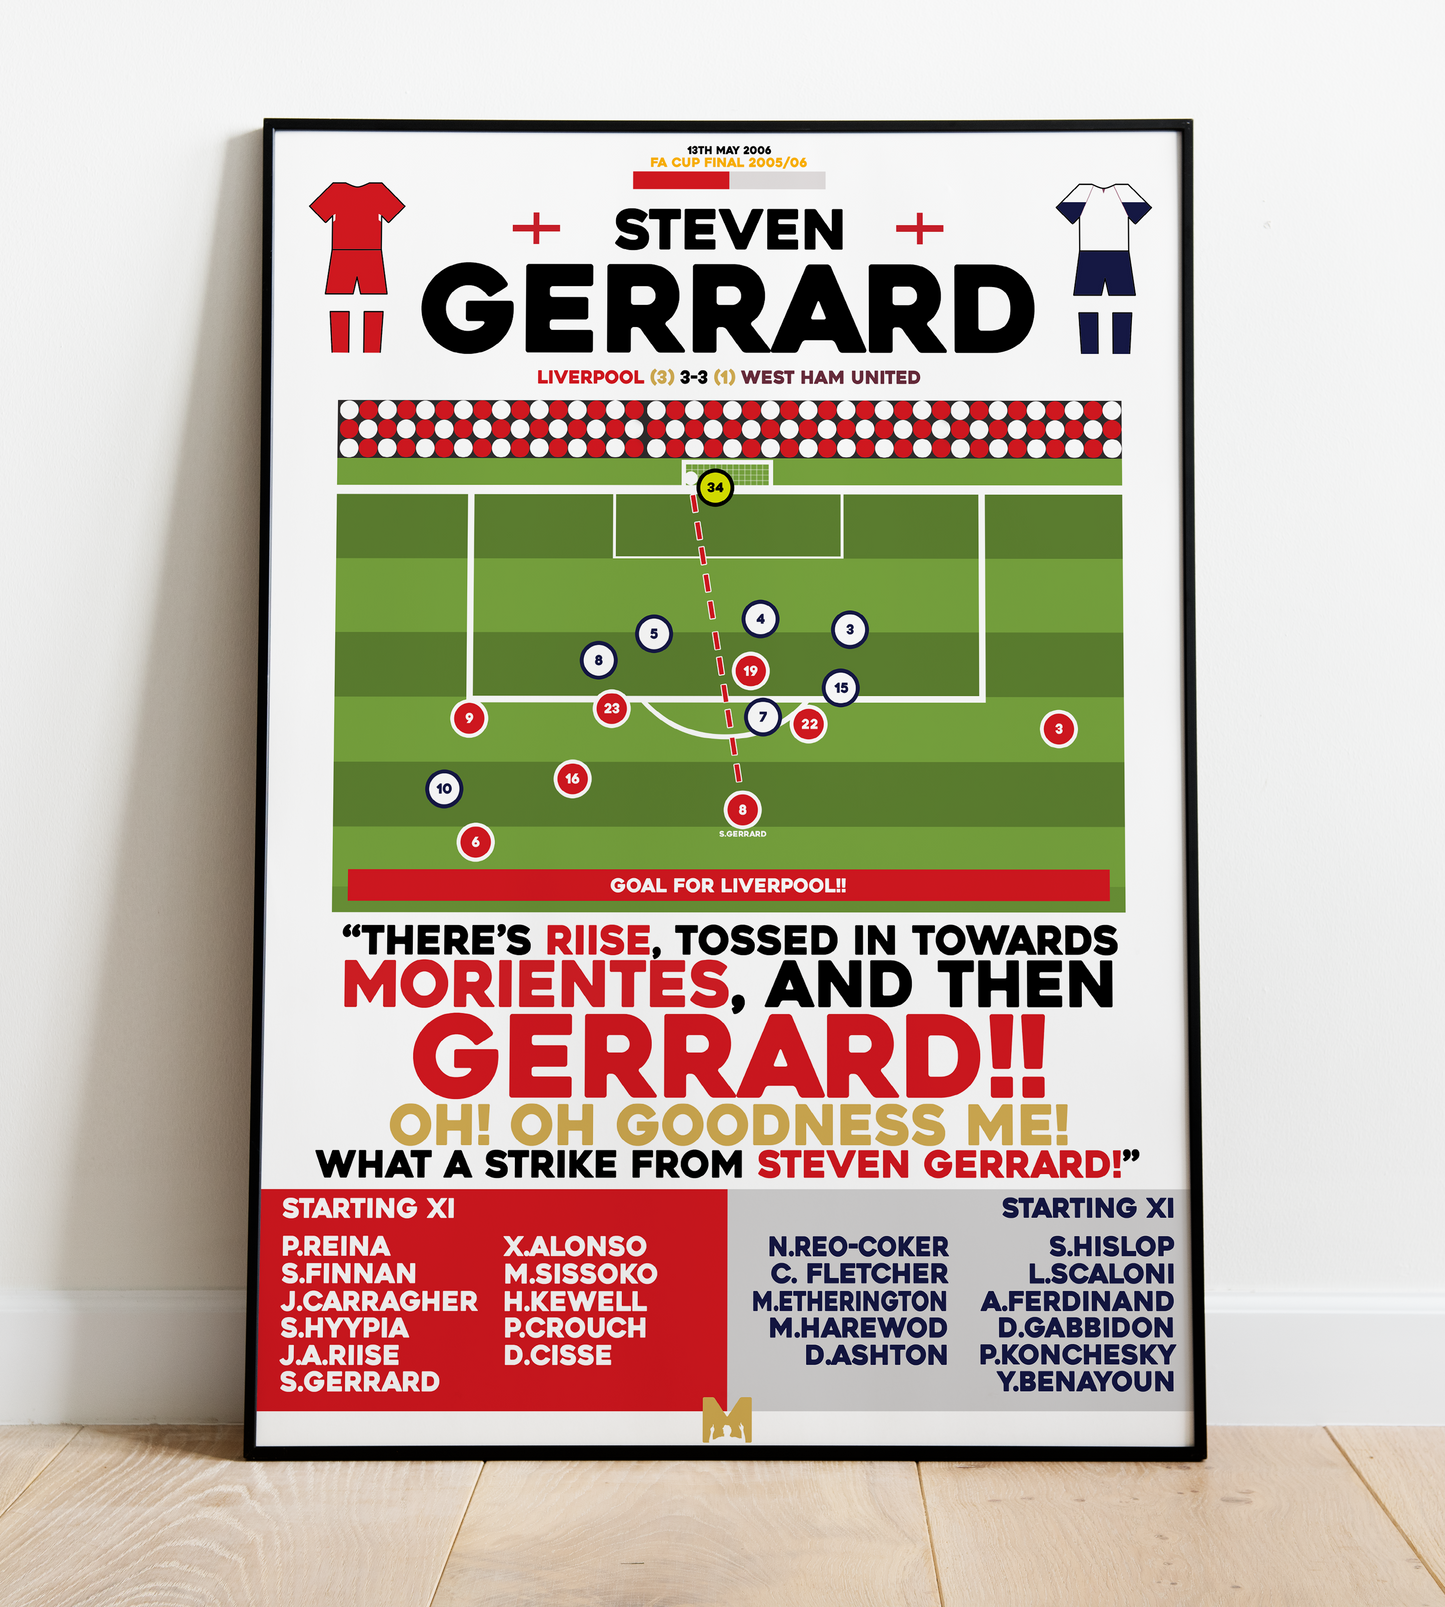 Steven Gerrard 2nd Goal vs West Ham United - FA Cup 2006 - Liverpool